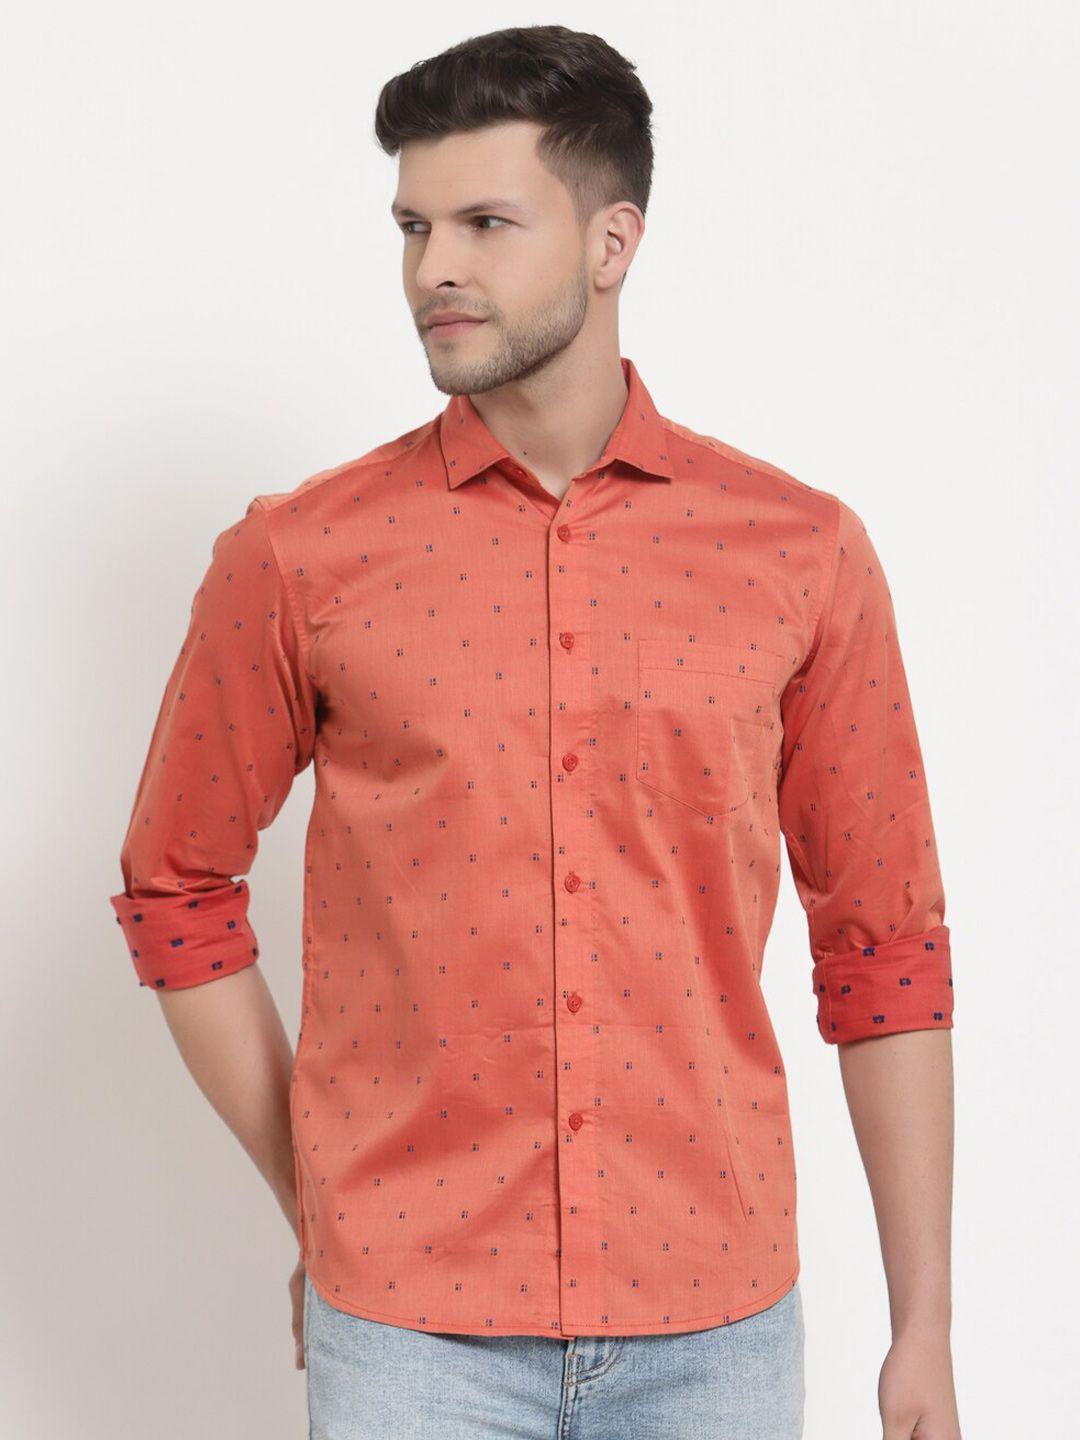 emerals men orange & navy blue standard printed casual shirt